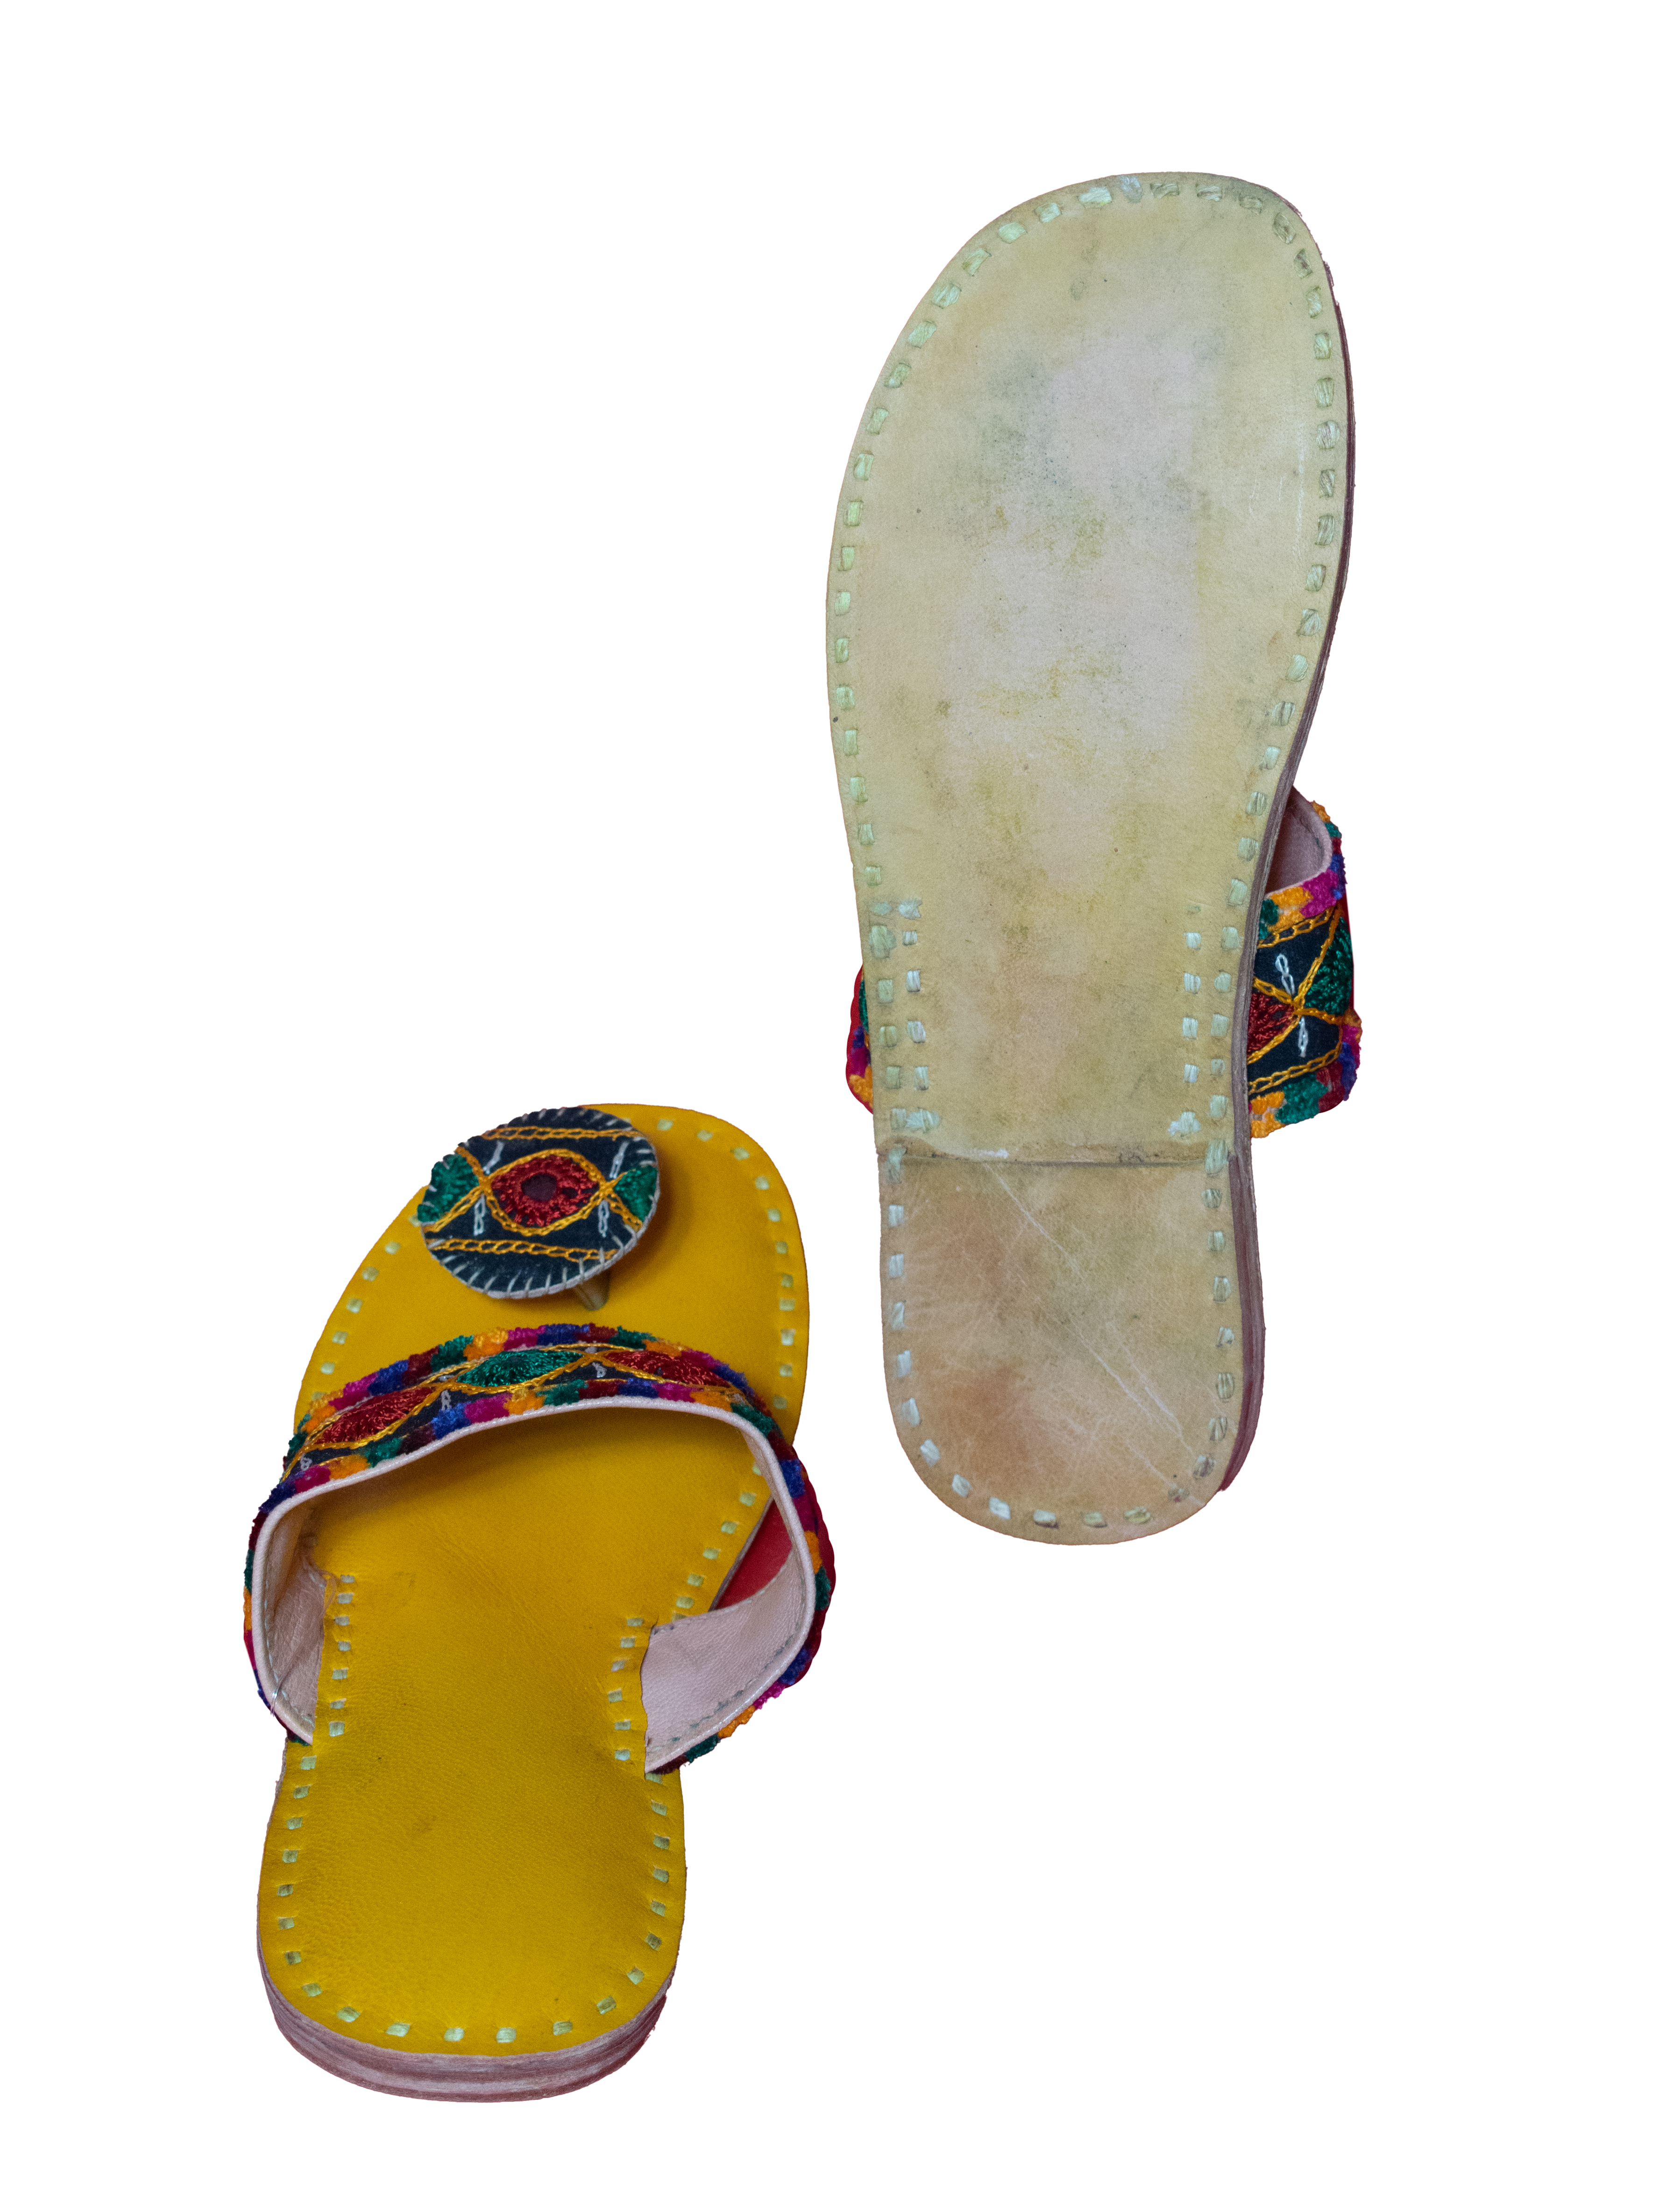 rajasthani handmade slipper shoes & chapple juttis at Rs 150 / Pair in  Jaipur